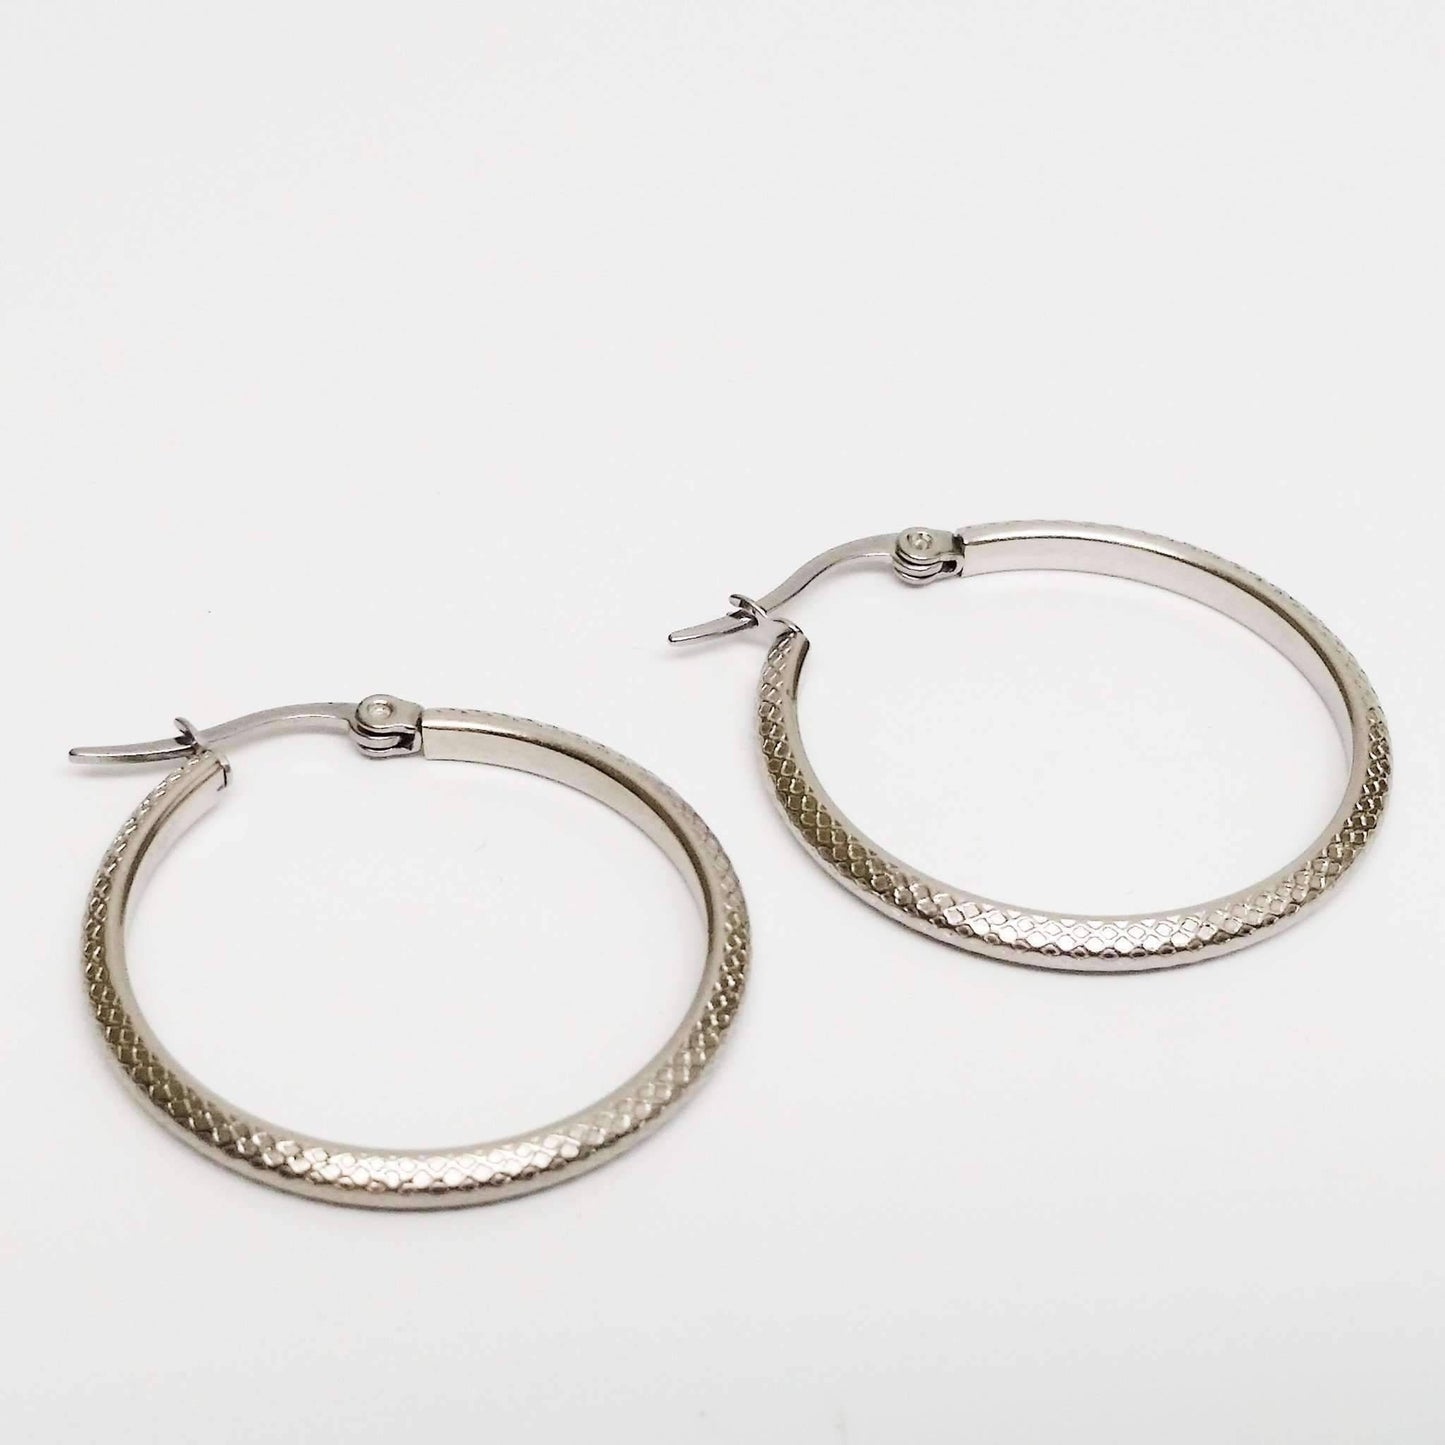 Feshionn IOBI Earrings Art Nouveau Etched Stainless Steel Hoop Earrings